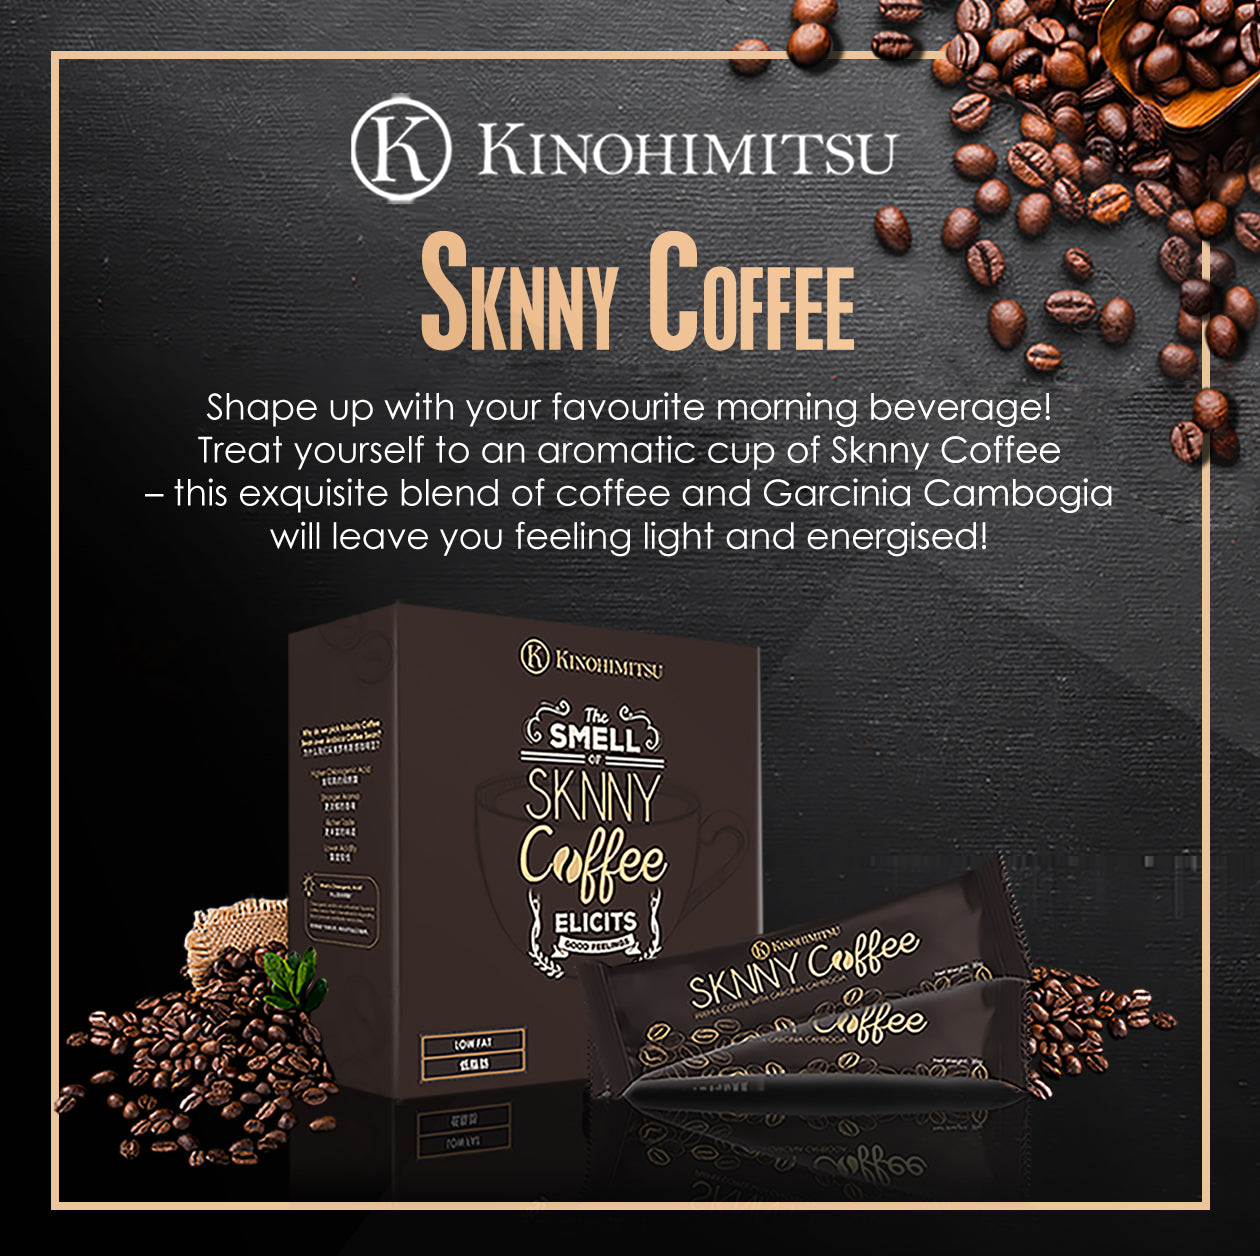 Sknny Coffee